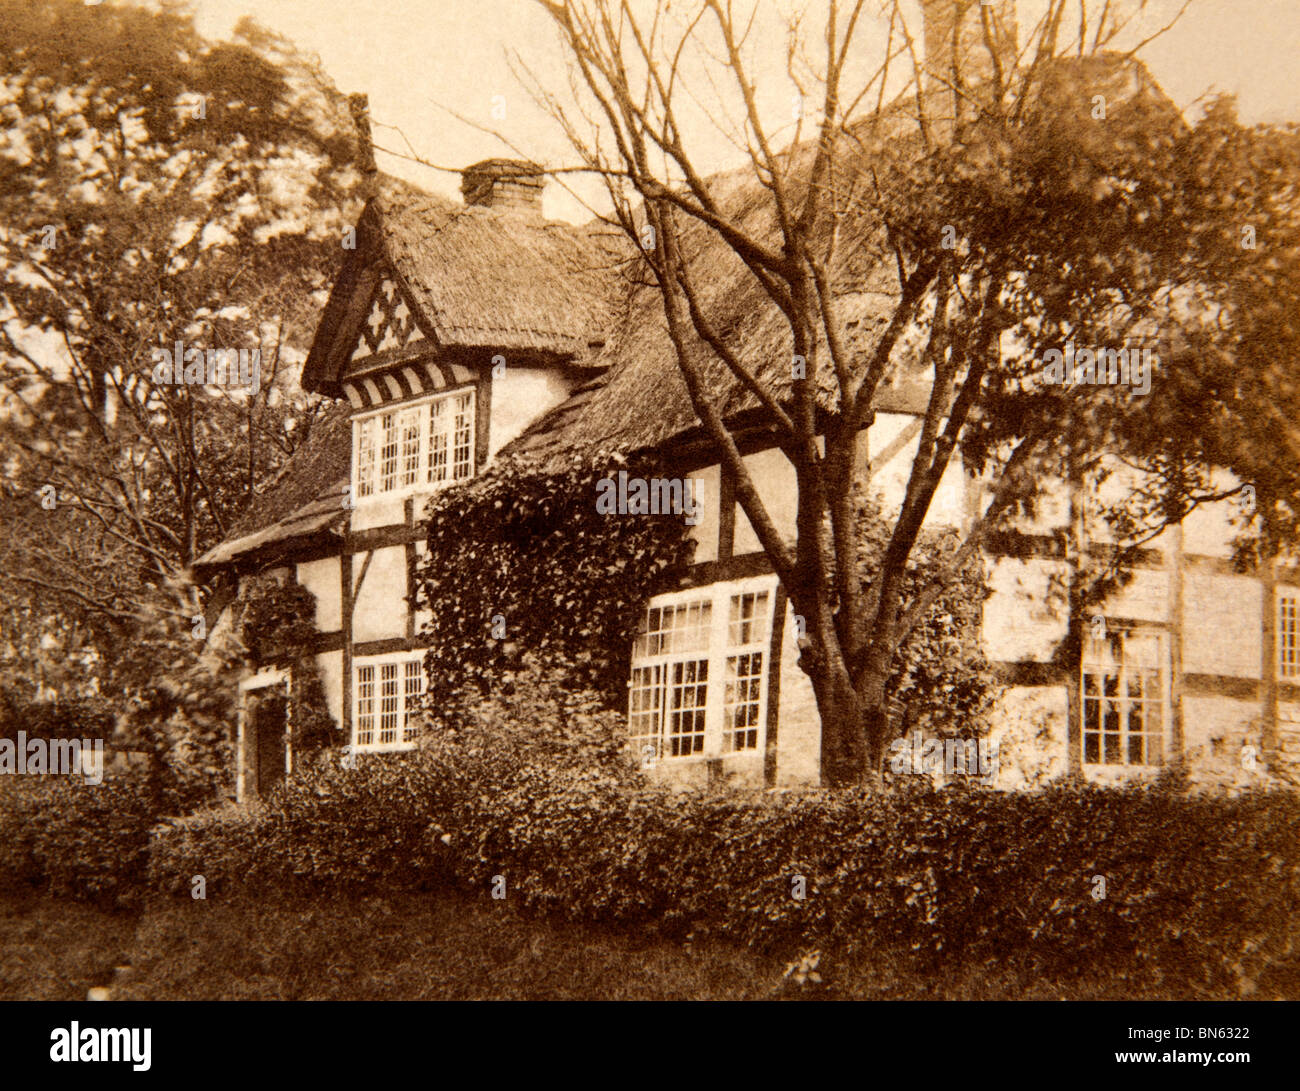 UK, England, Cheshire, Nether Alderley, Artist’s Lane, Yew Tree Cottage, 1800s Victorian photograph Stock Photo